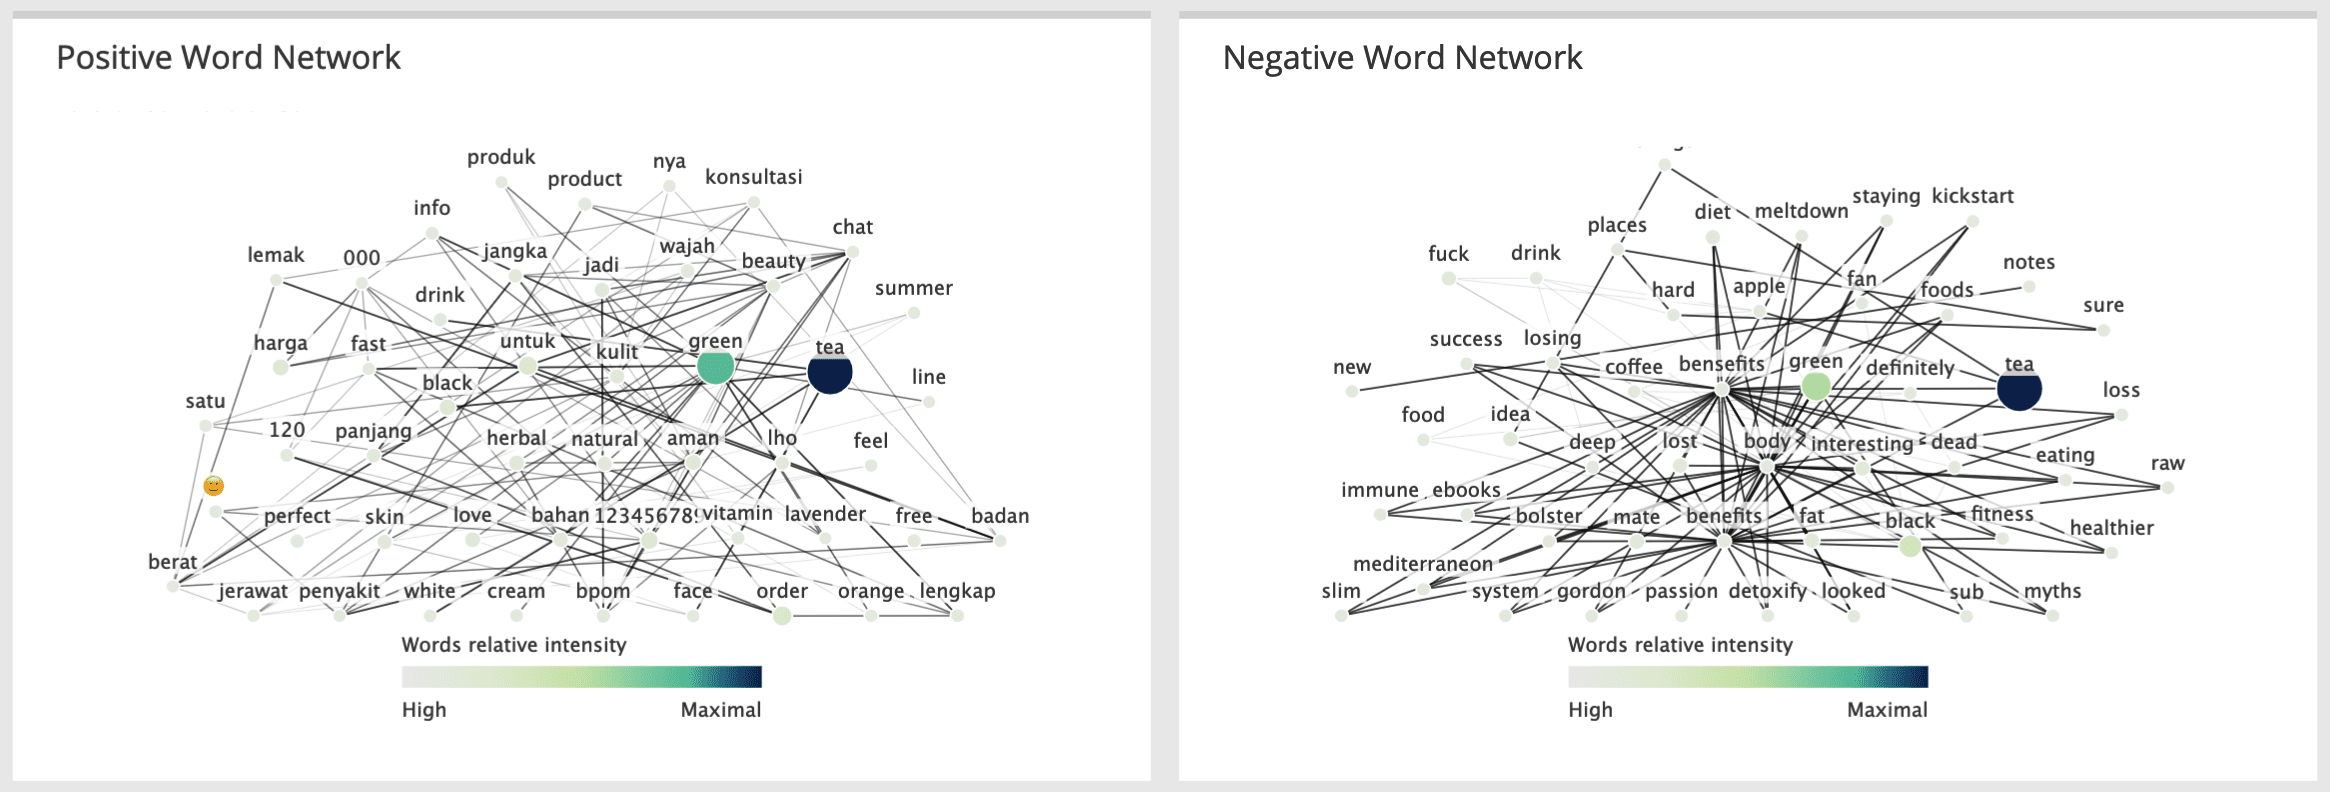 donnee-qualitative-word-networks-min